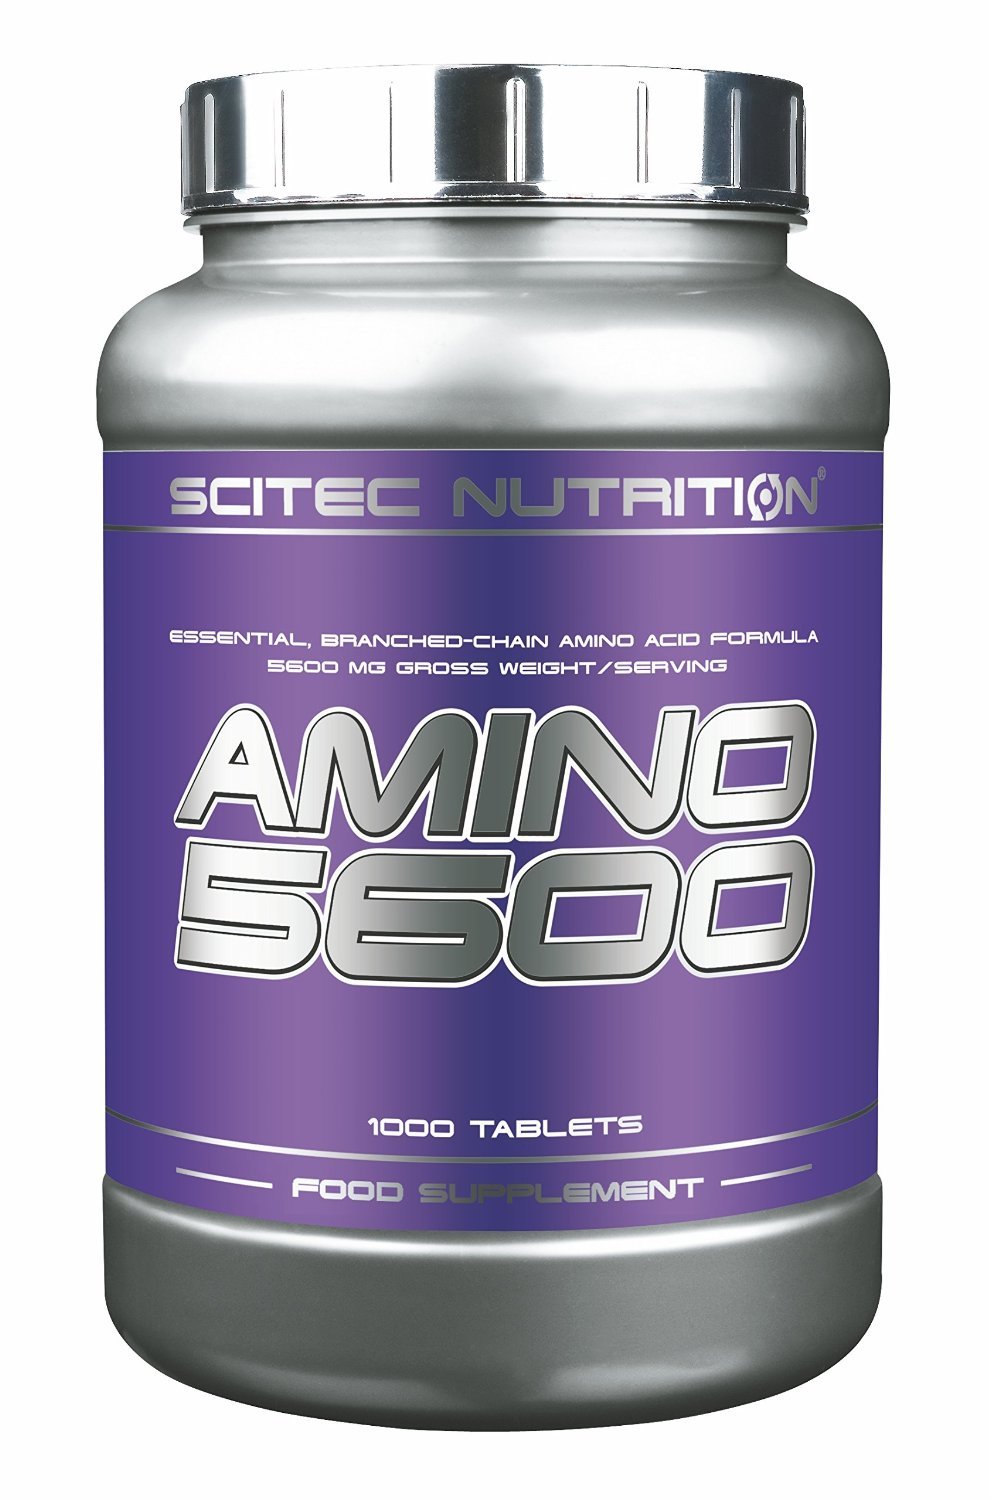 Amino 5600, 500 pcs, Scitec Nutrition. Amino acid complex. 